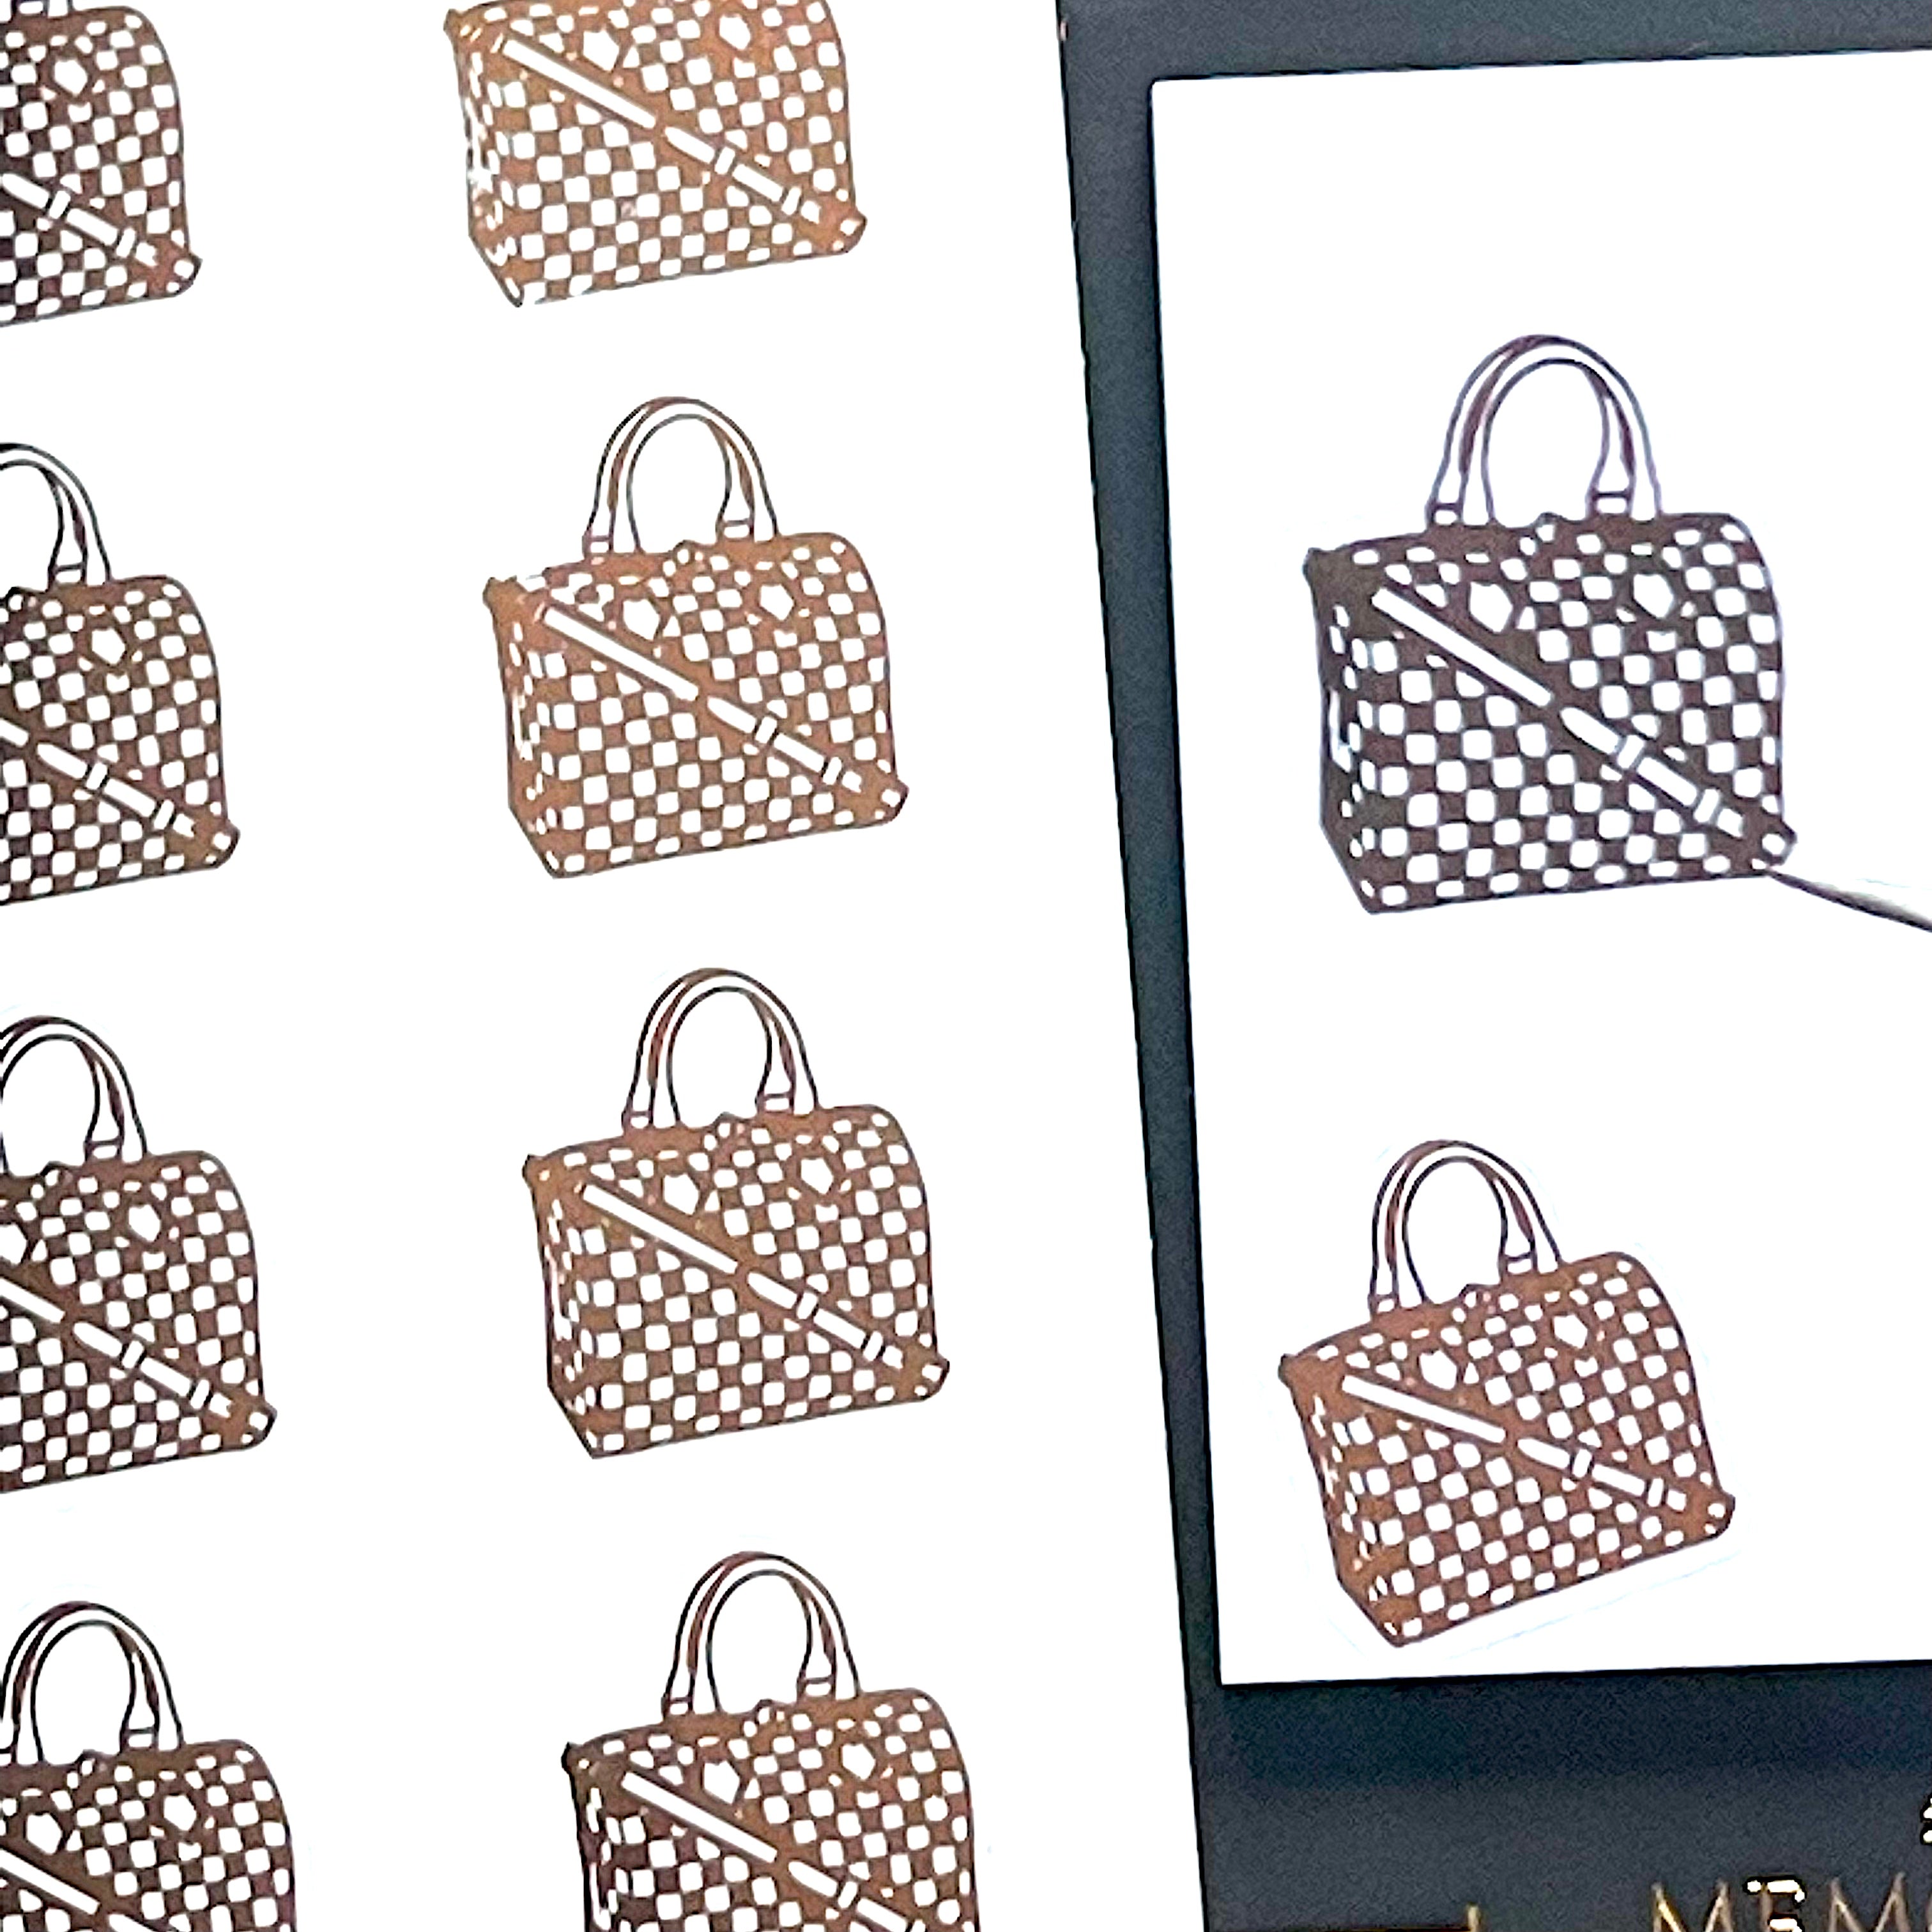 Luxury Bag Stickers- L V – Vantage Agendas